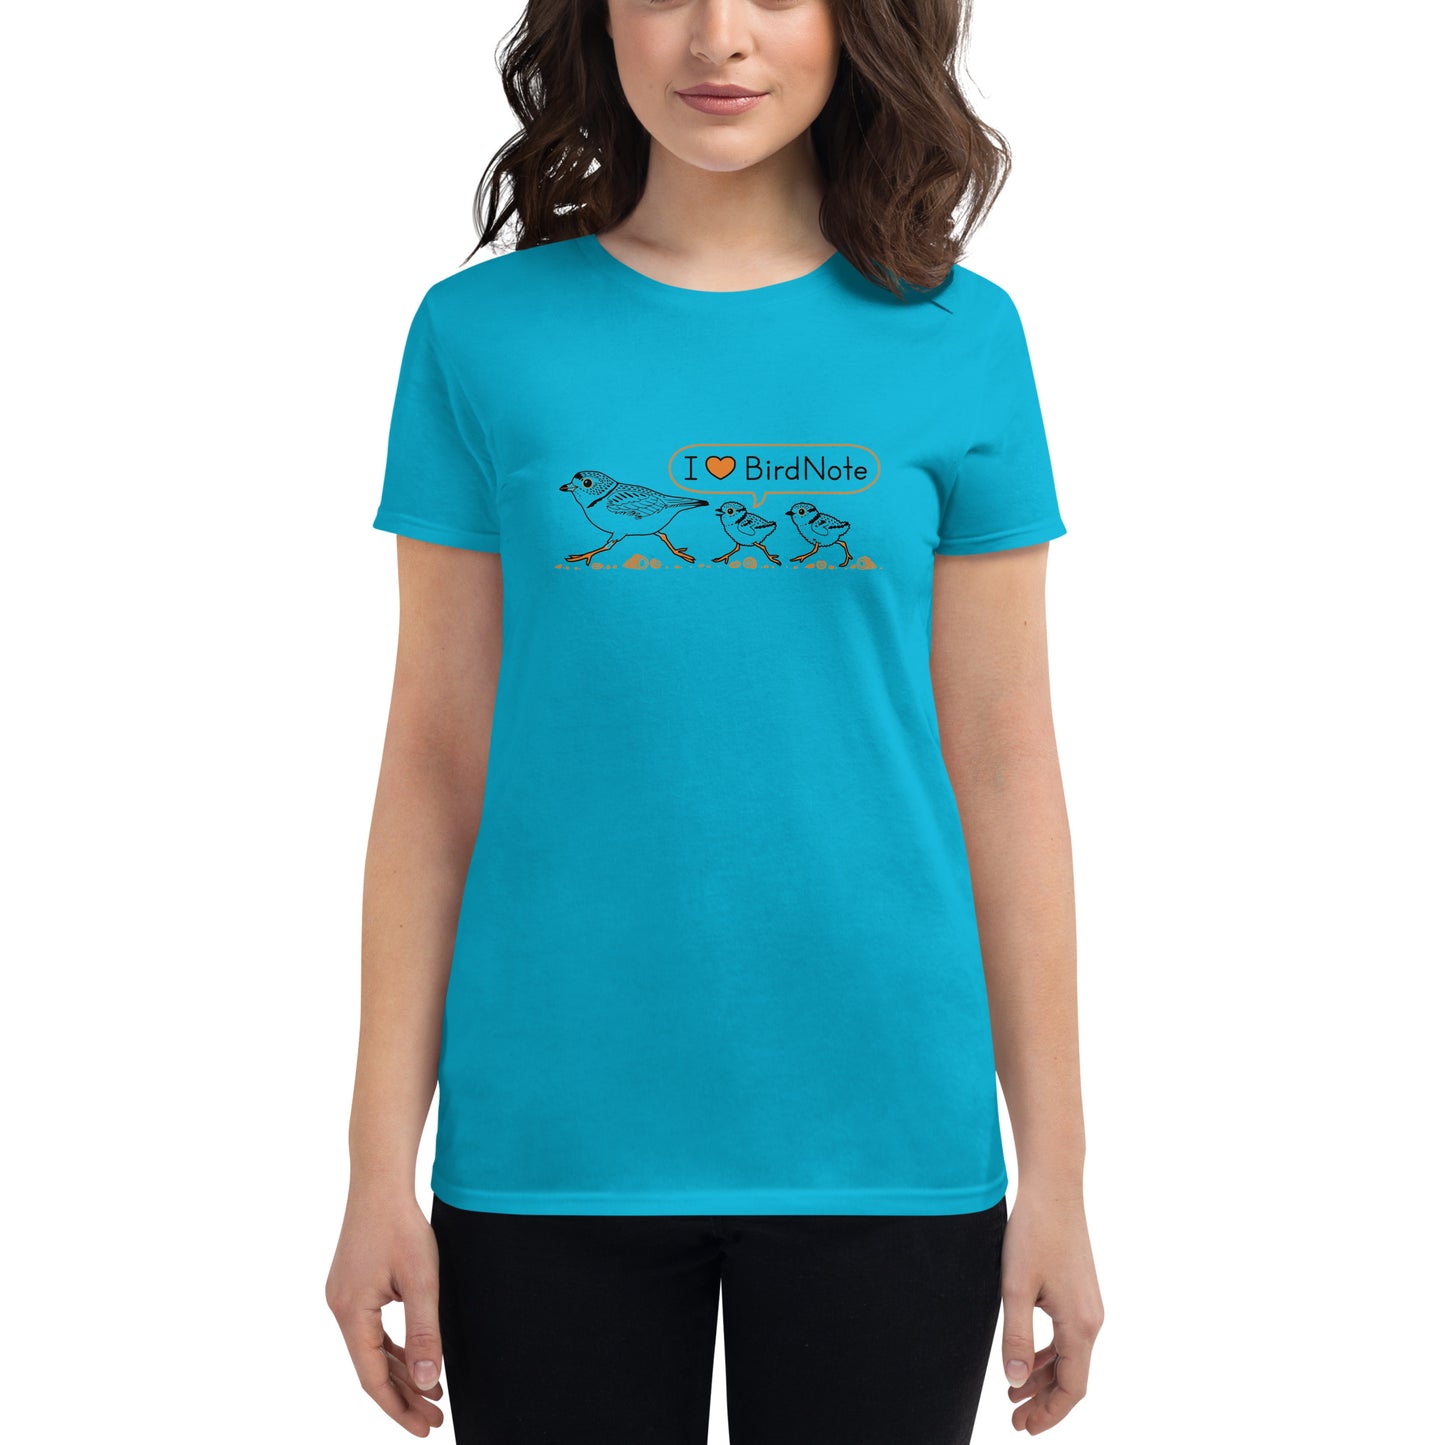 "I Love BirdNote" Fitted Short Sleeve T-Shirt